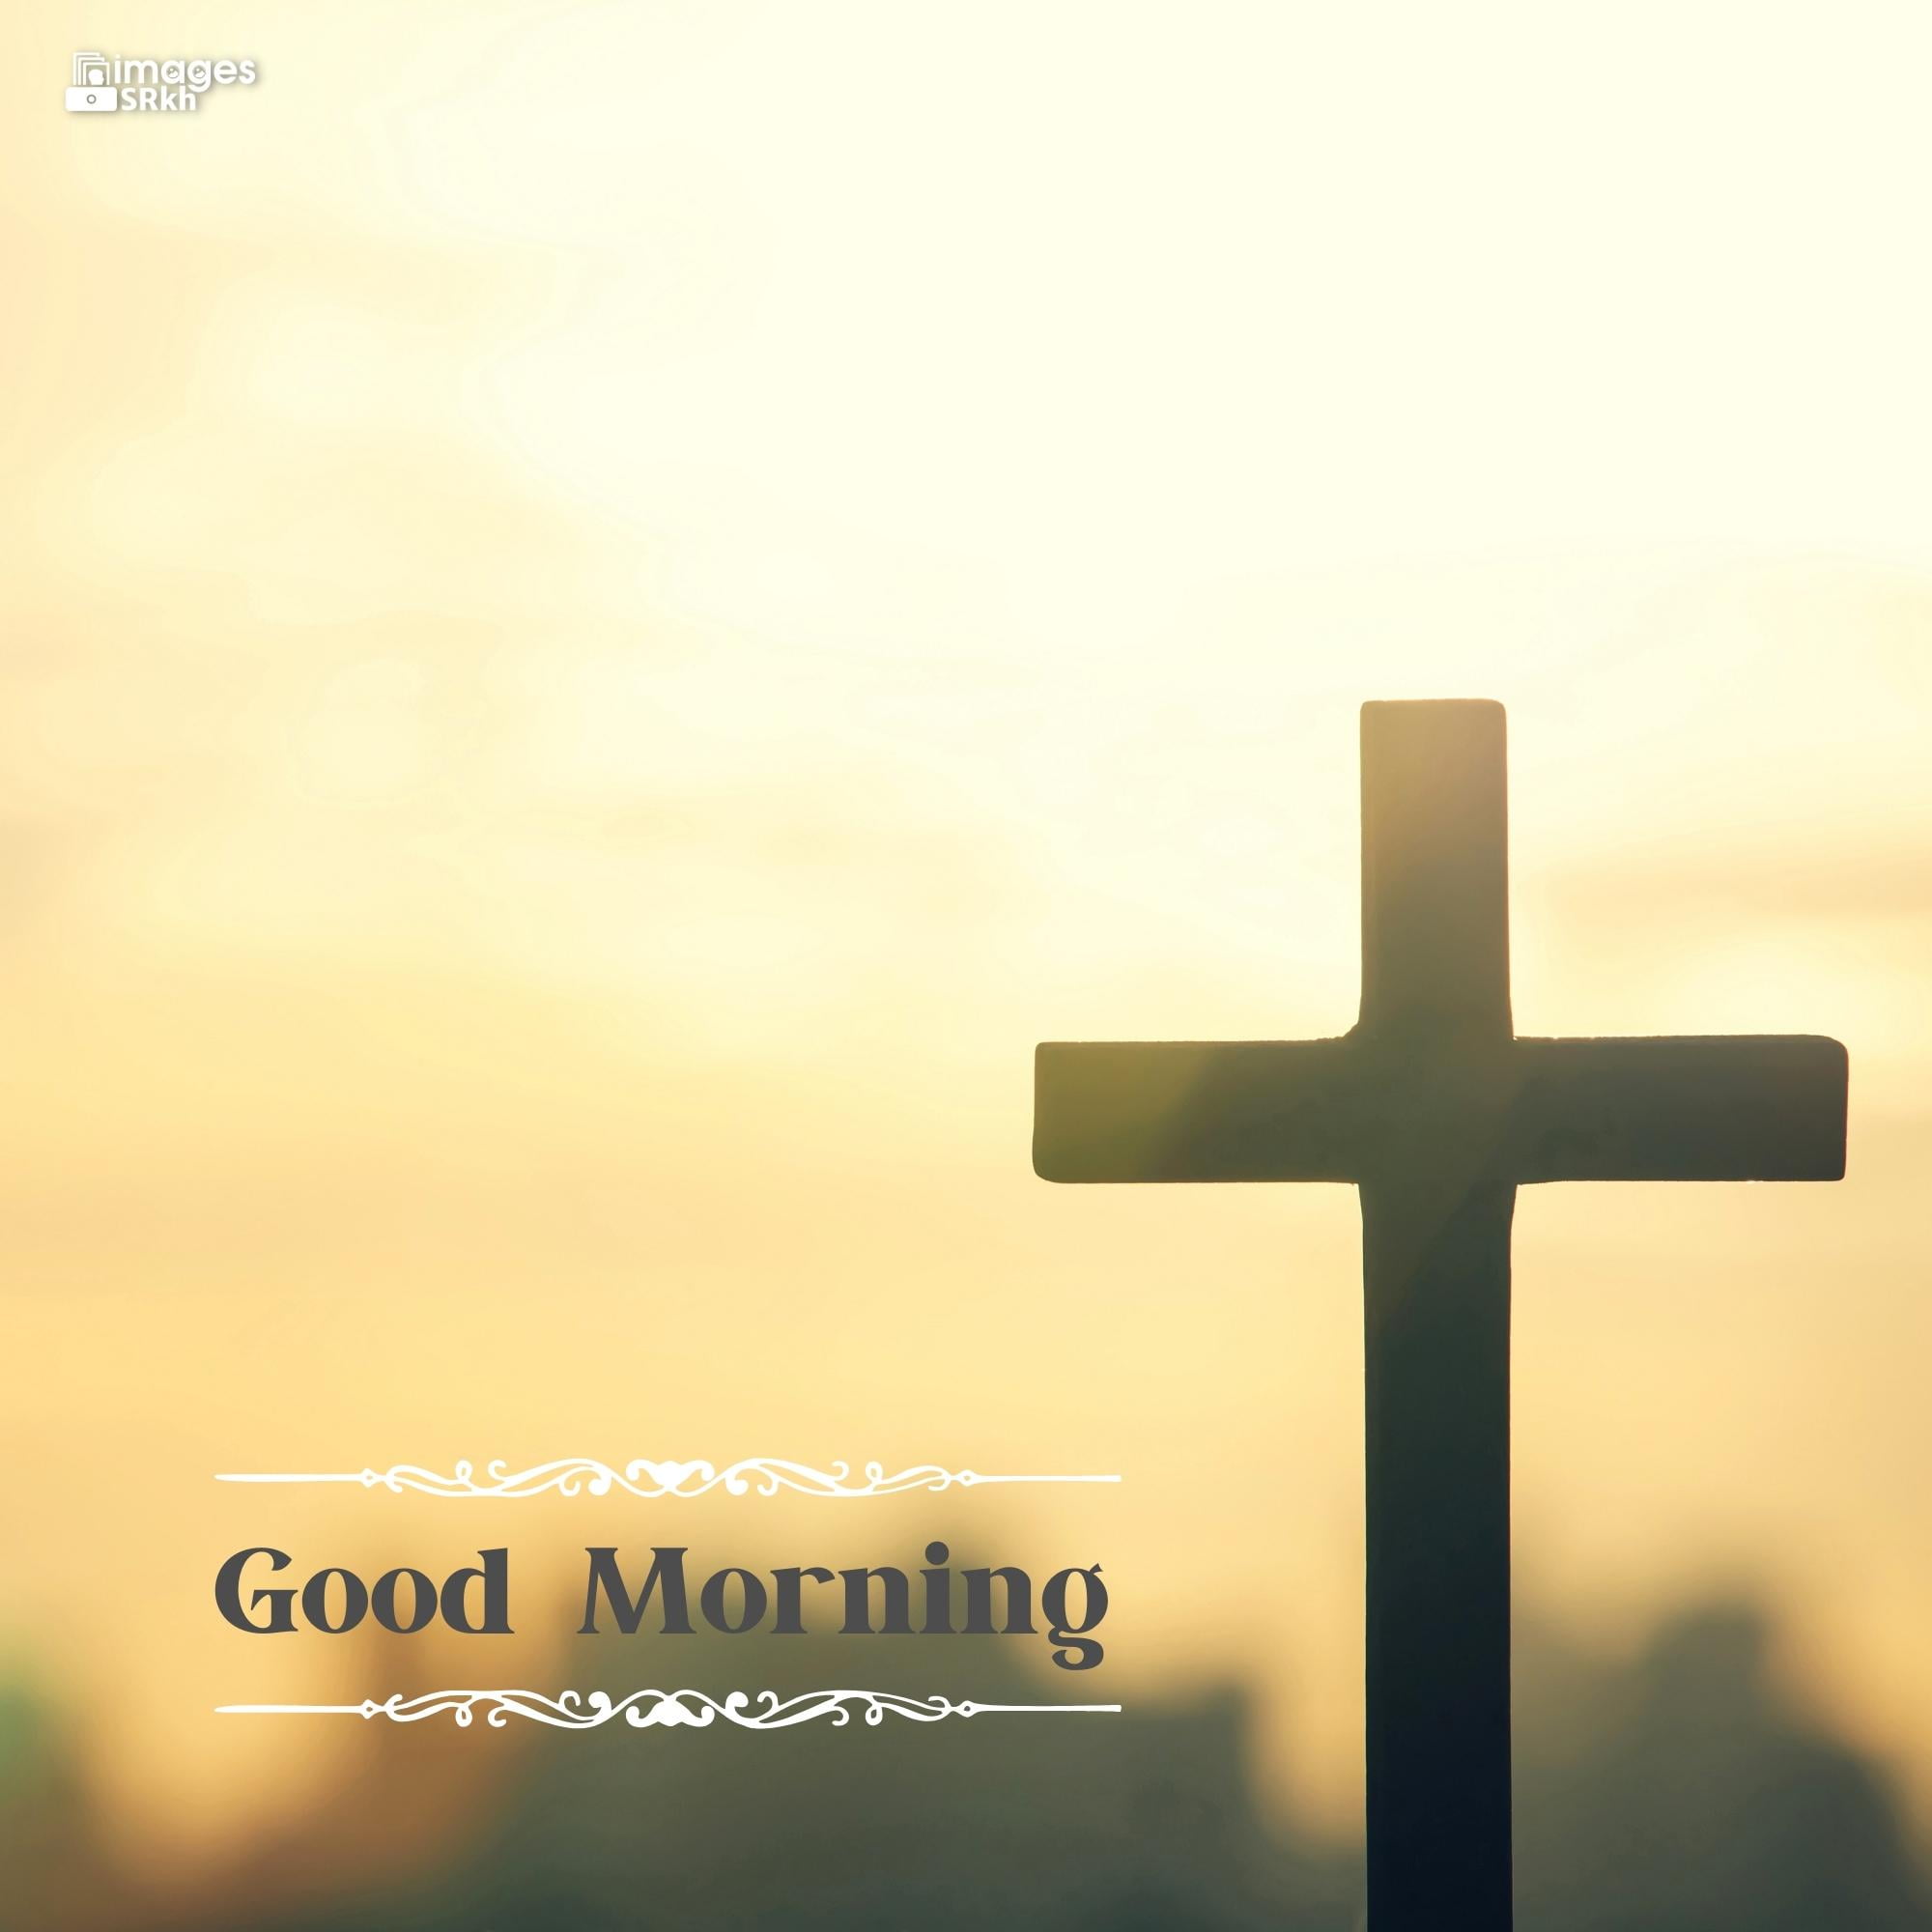 Good Morning Images For God